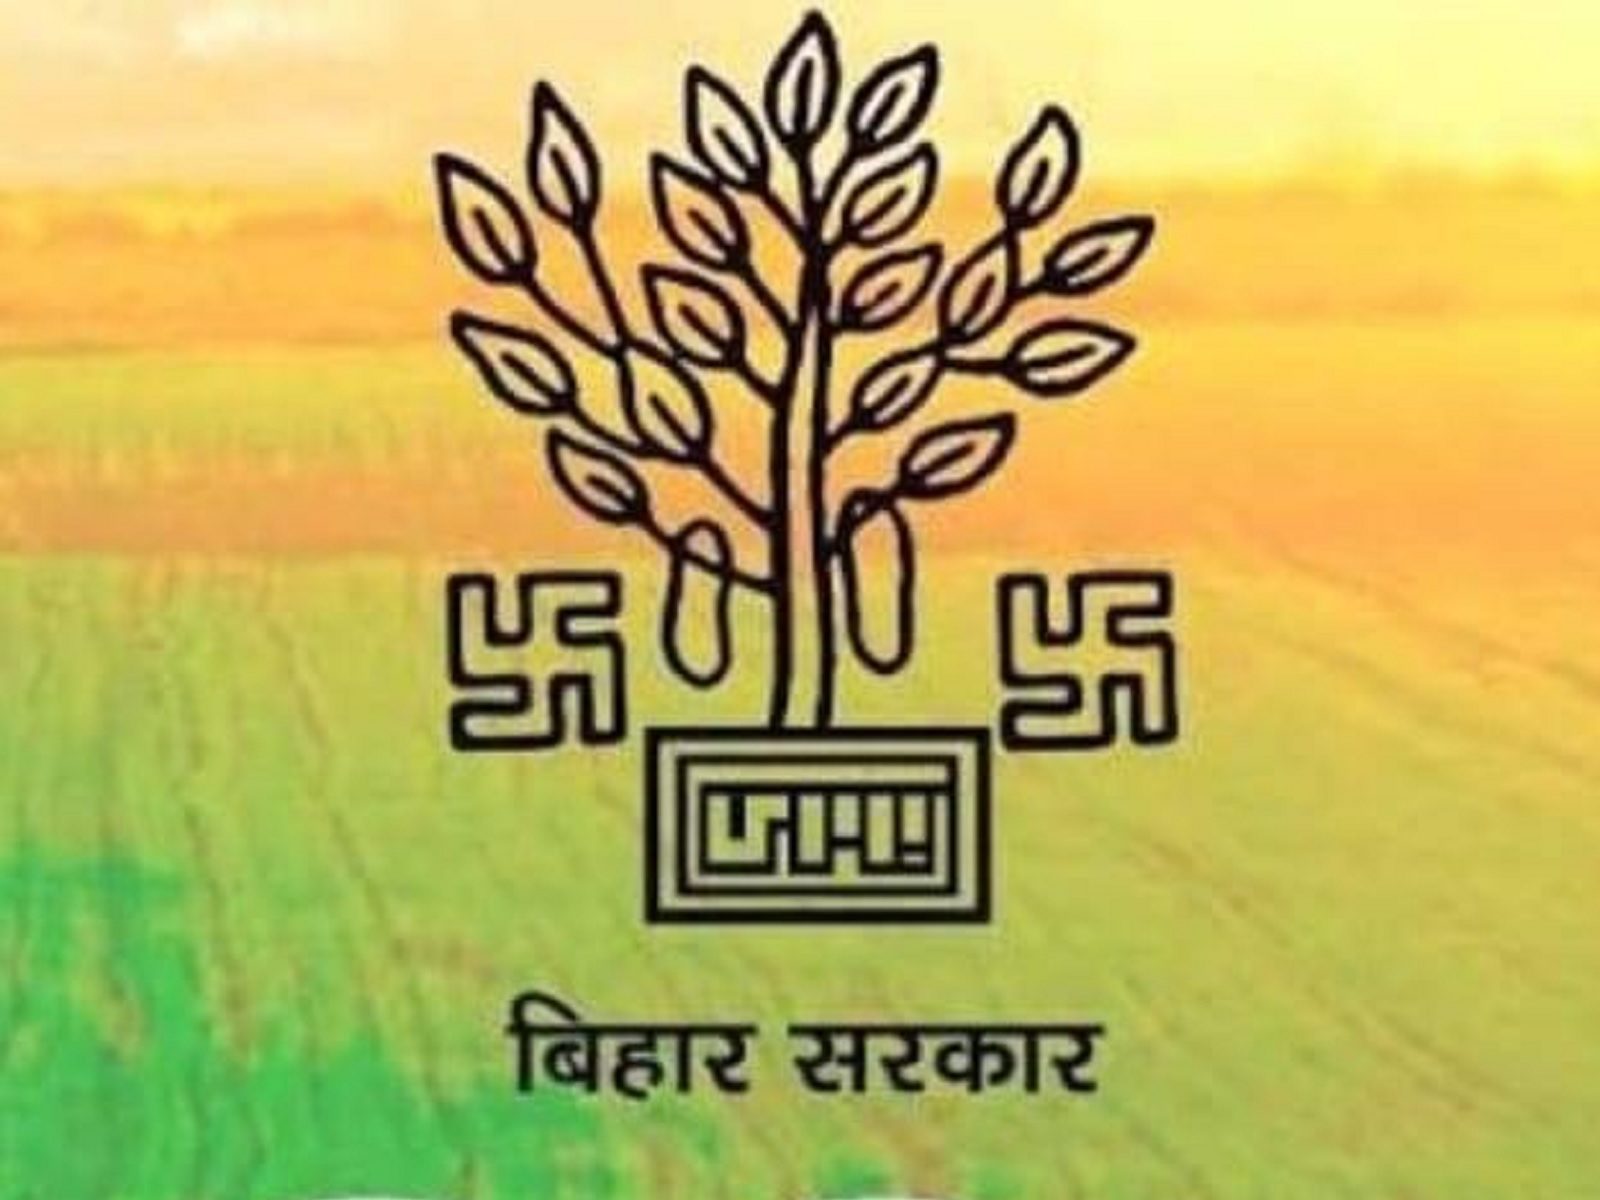 Startup Bihar - Startup Manager - Department of Industries, Government of  Bihar | LinkedIn